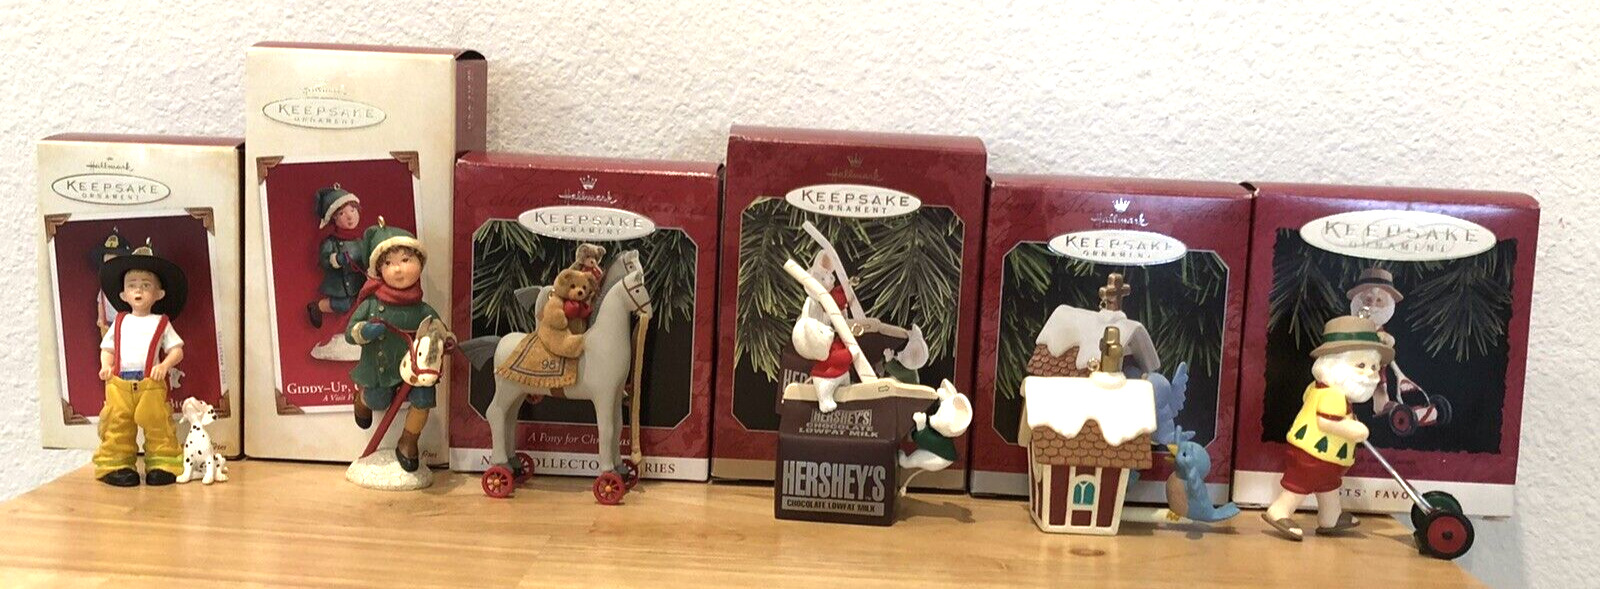 HALLMARK KEEPSAKE LOT OF 6 CHRISTMAS ORNAMENTS IN ORIGINAL BOXES